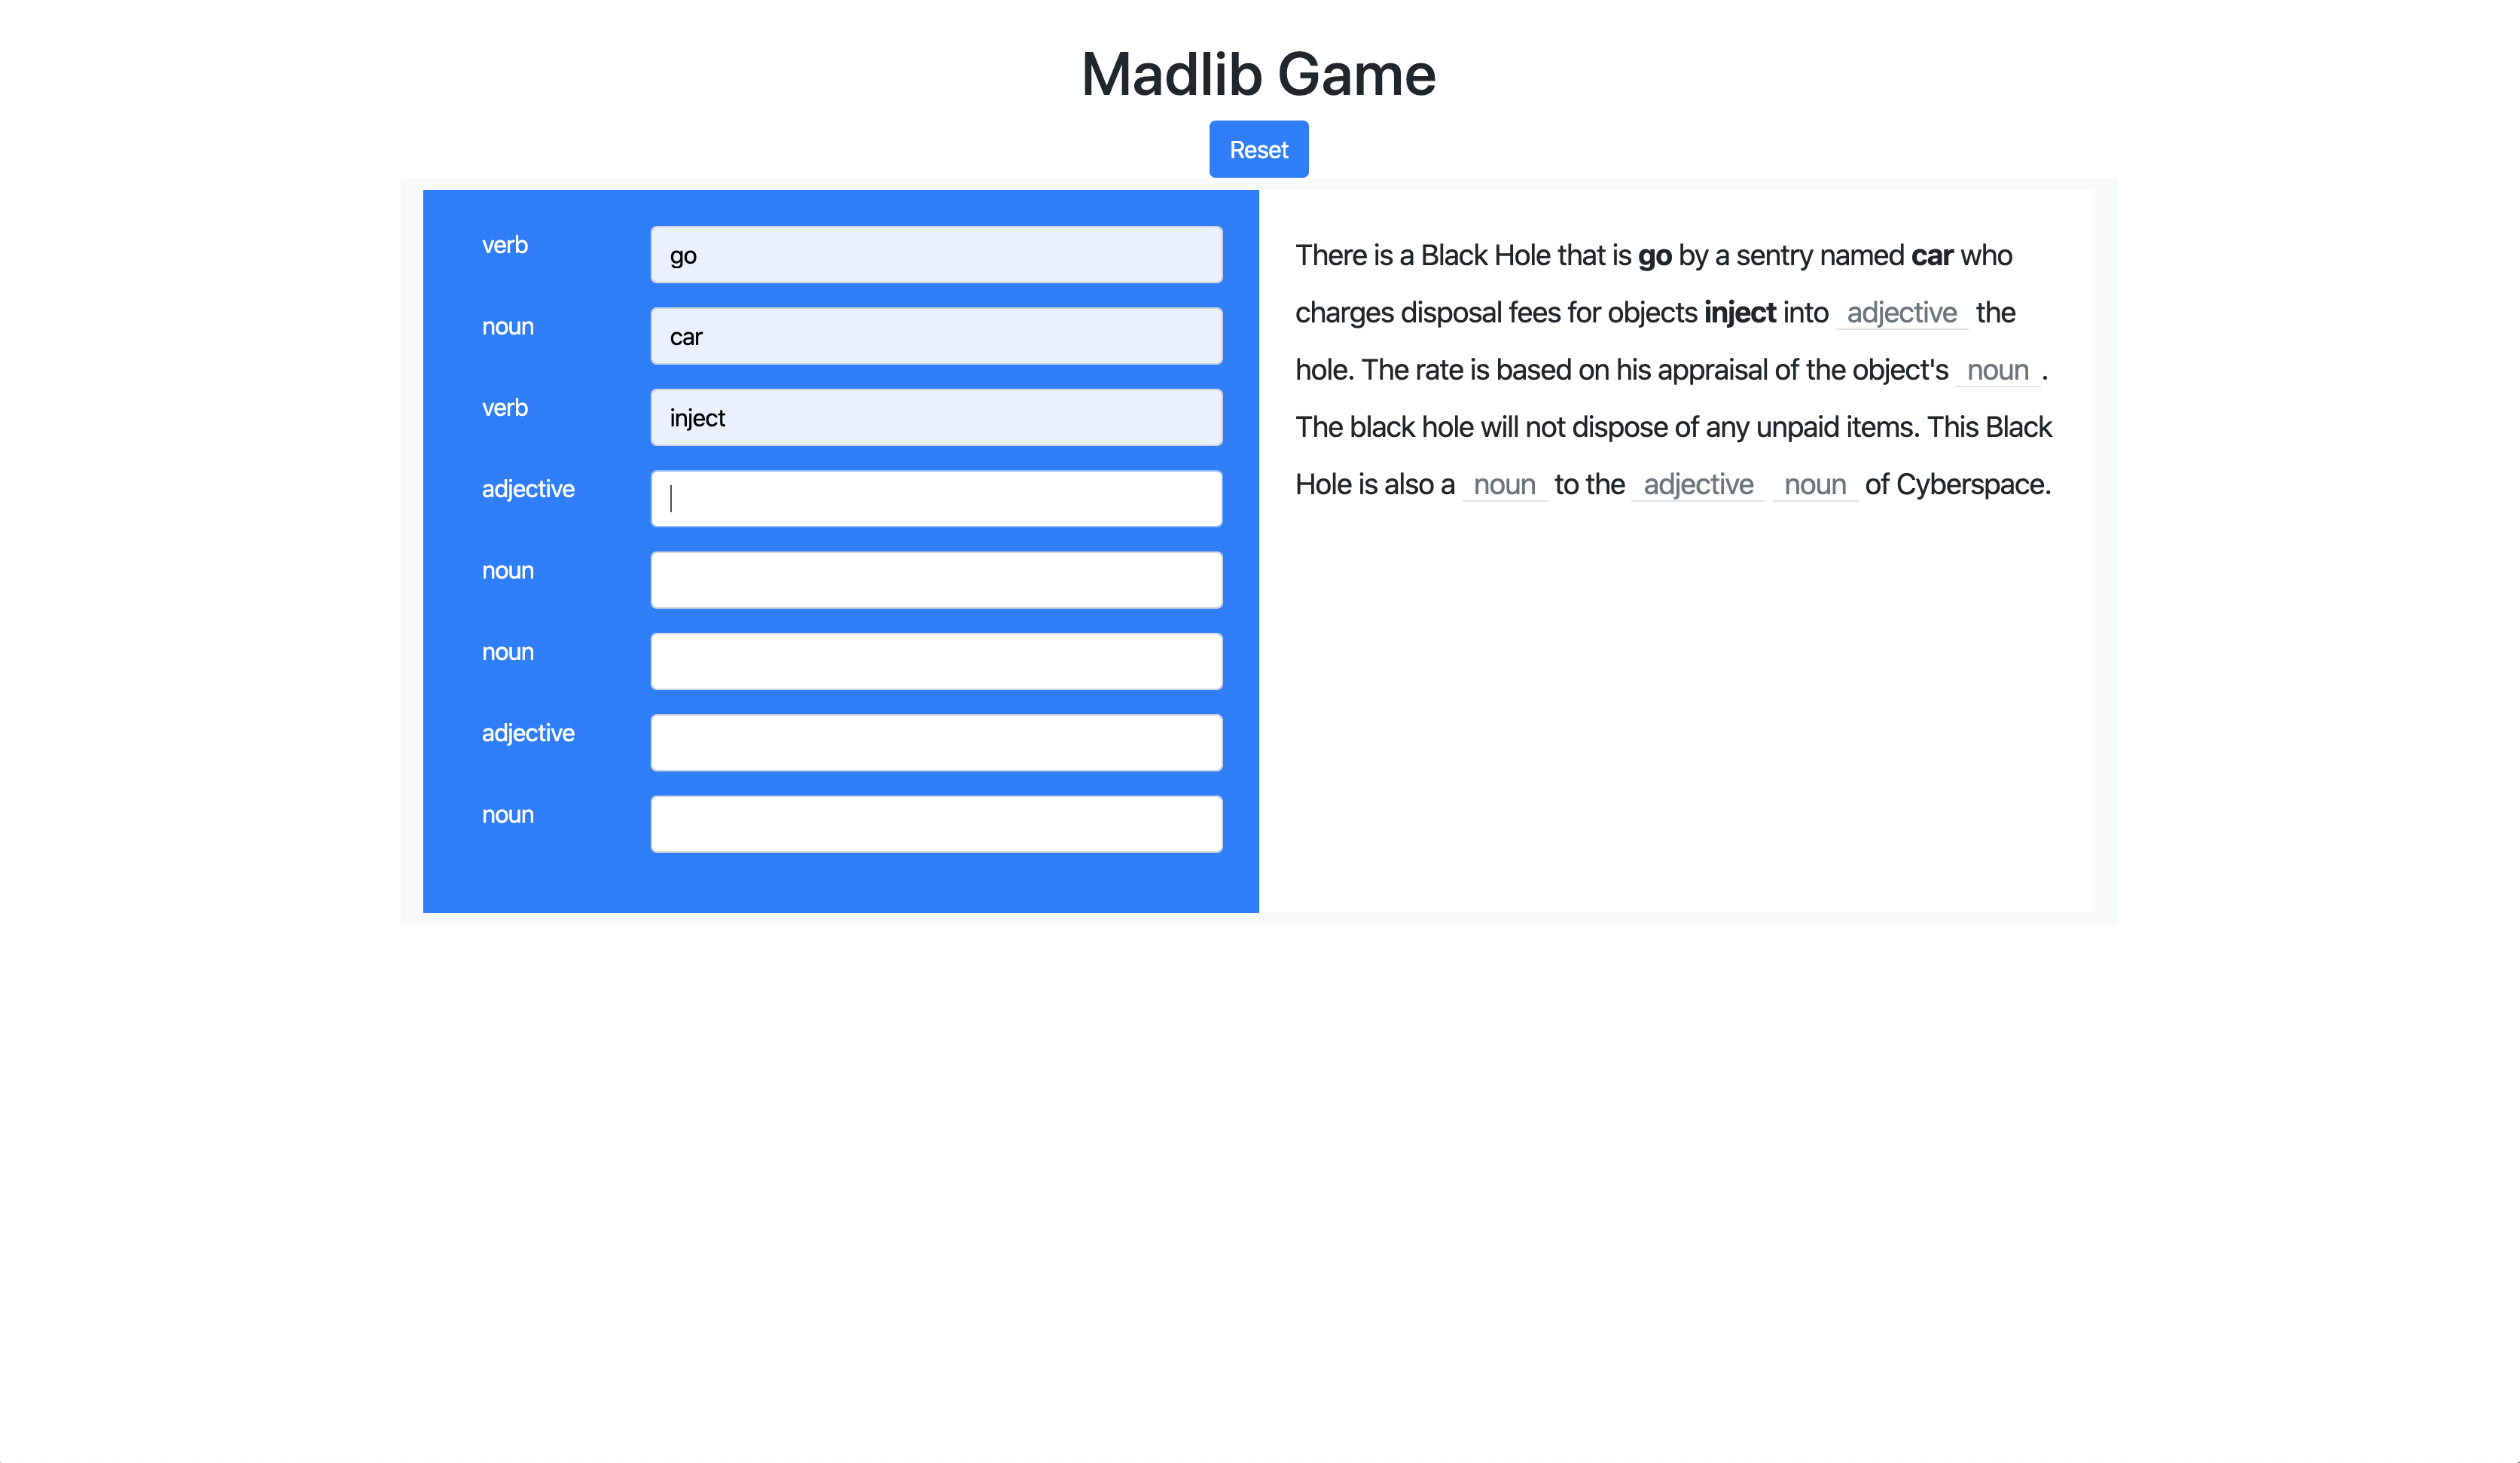 screenshot of TA solution to madlib game